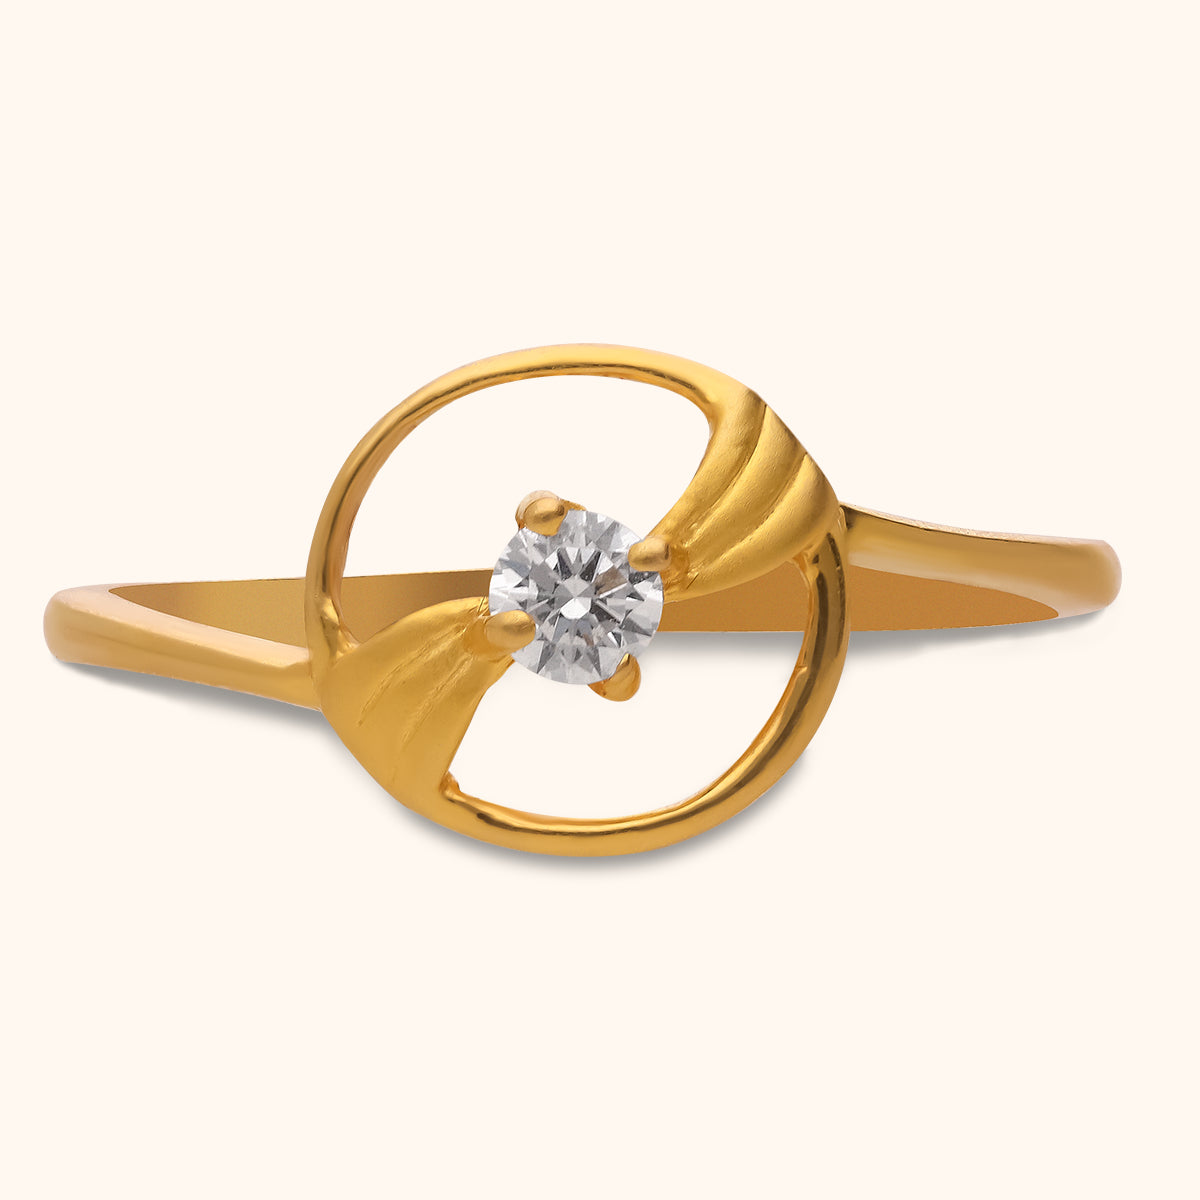 Golden Women Latest Gold American Diamond Ring at Rs 13092/piece in Kolkata  | ID: 21300881488